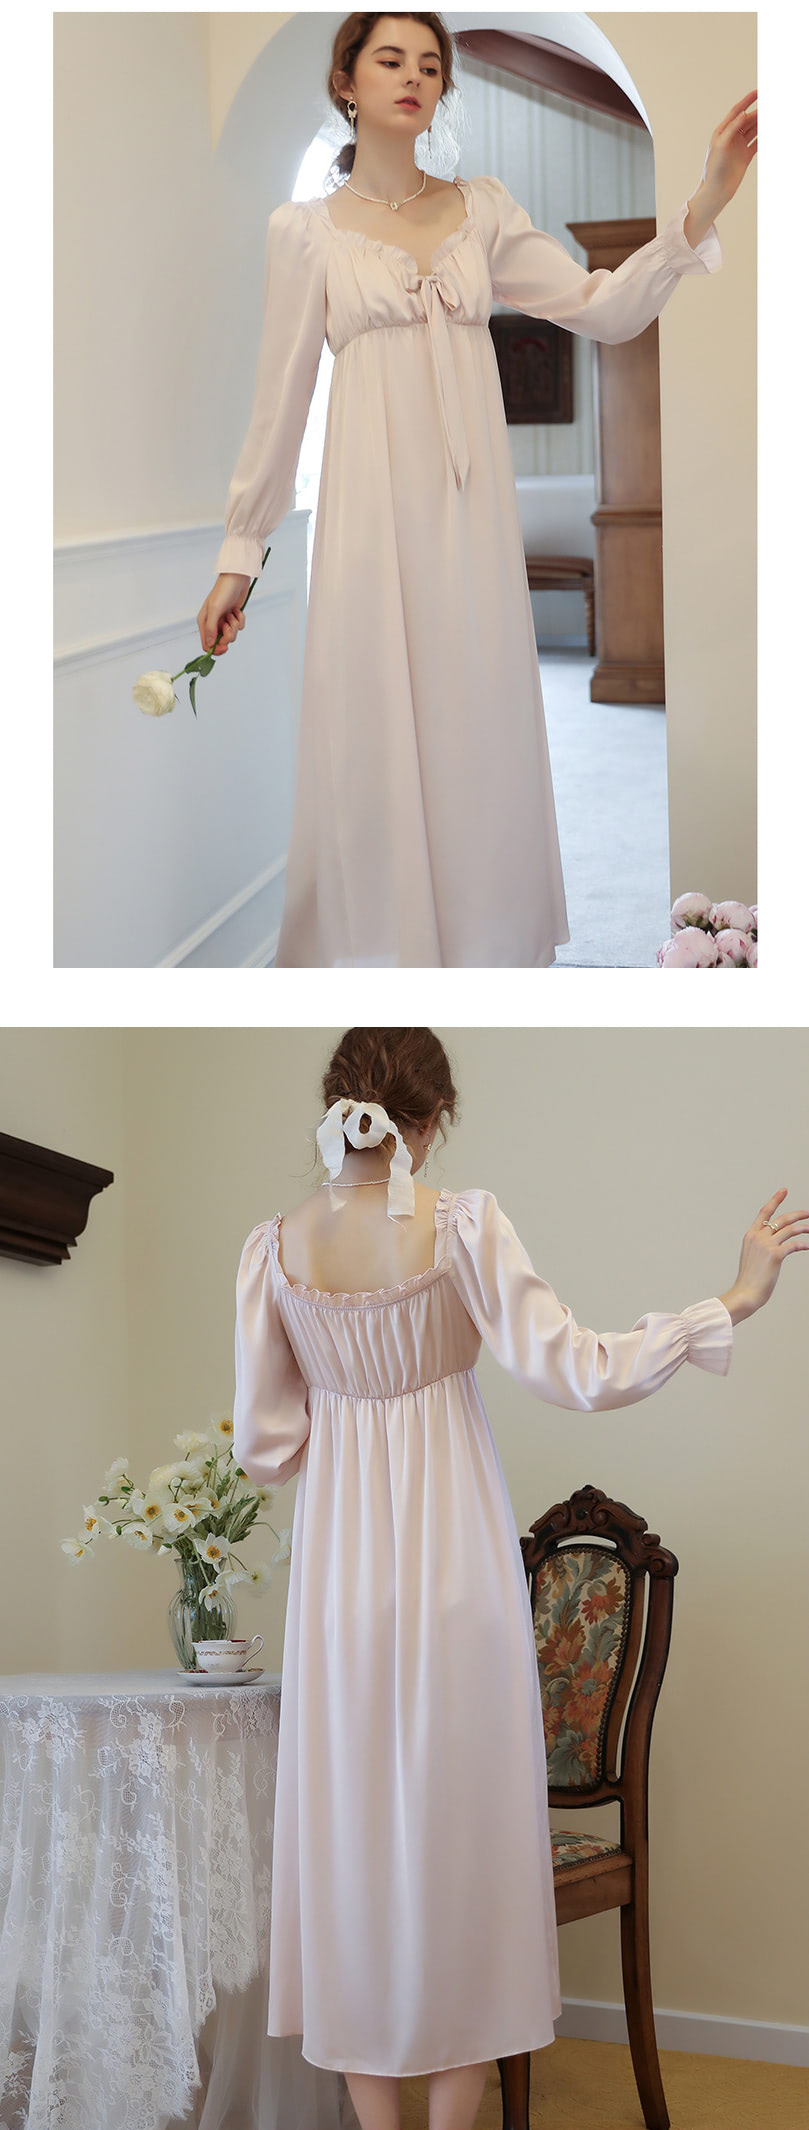 Sweet-Princess-Satin-Sleepwear-Long-Robe-House-Dress26.jpg